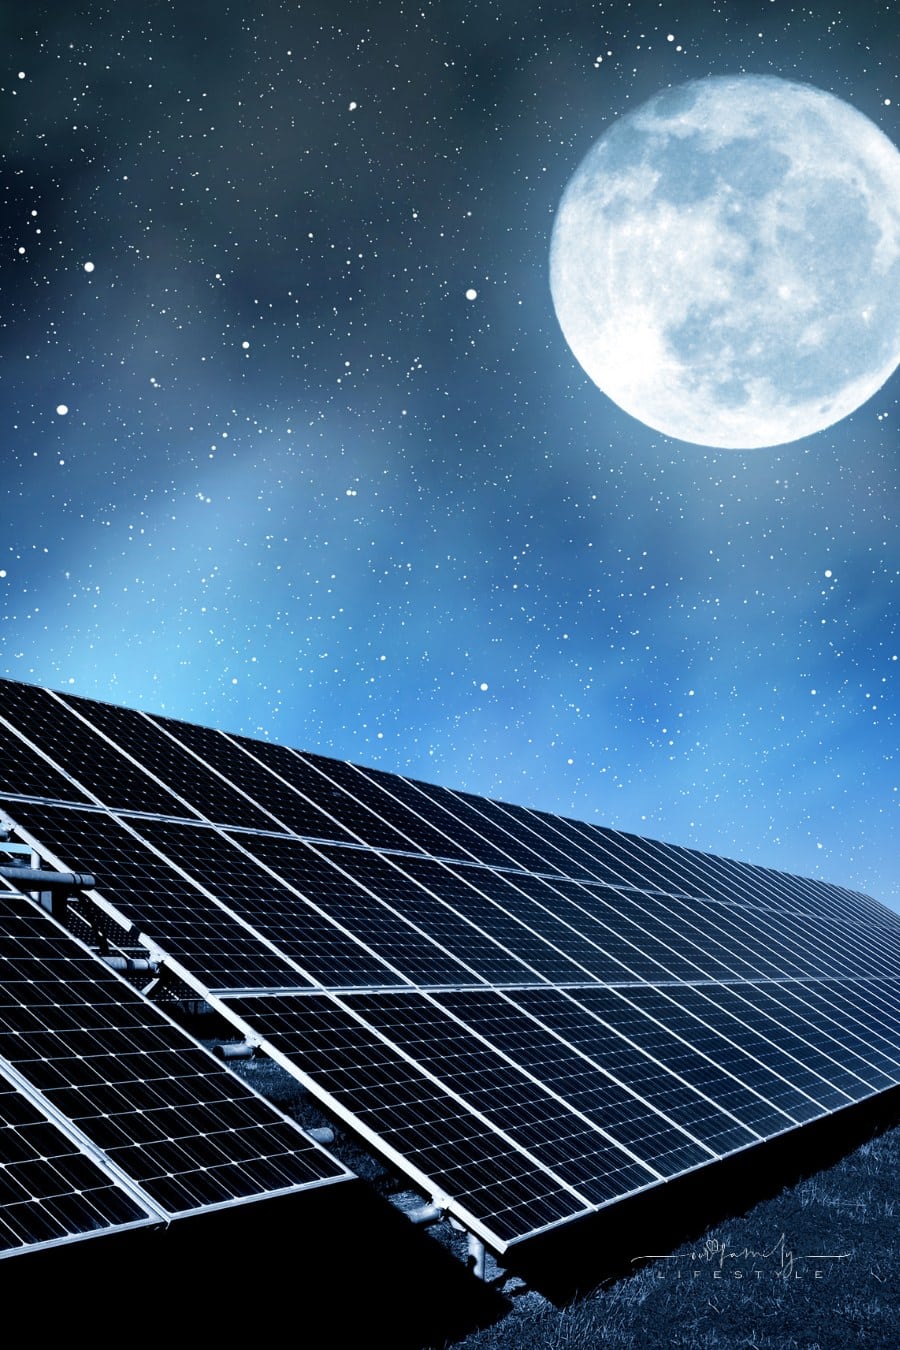 solar panels under a full moon in the night sky